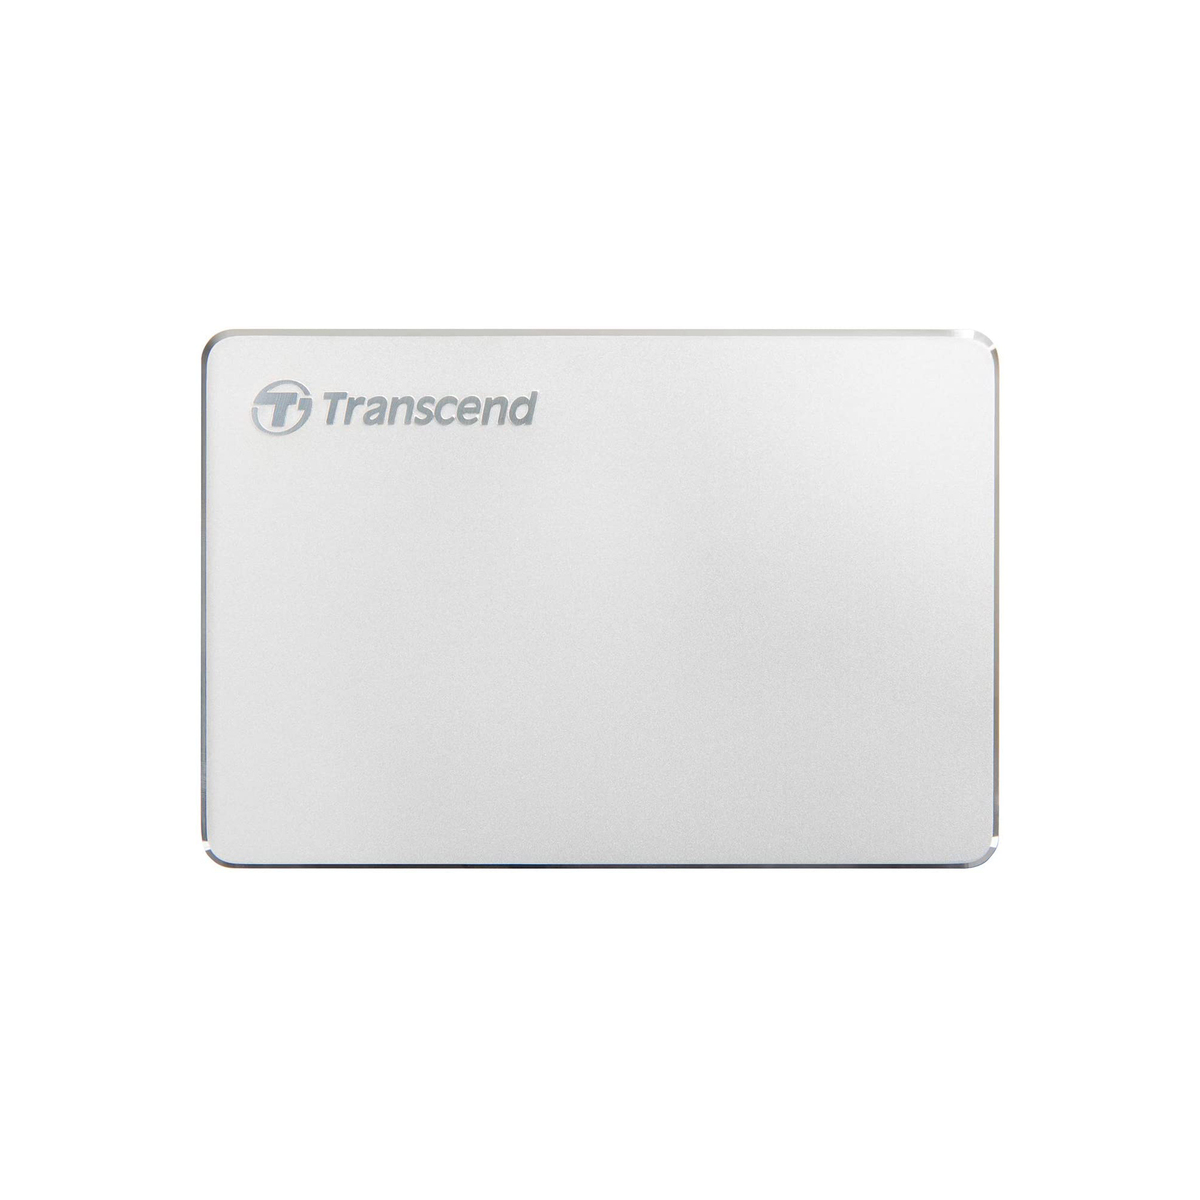 Transcend StoreJet External Hard Drive 2.5" TS2TSJ25C3S 2TB